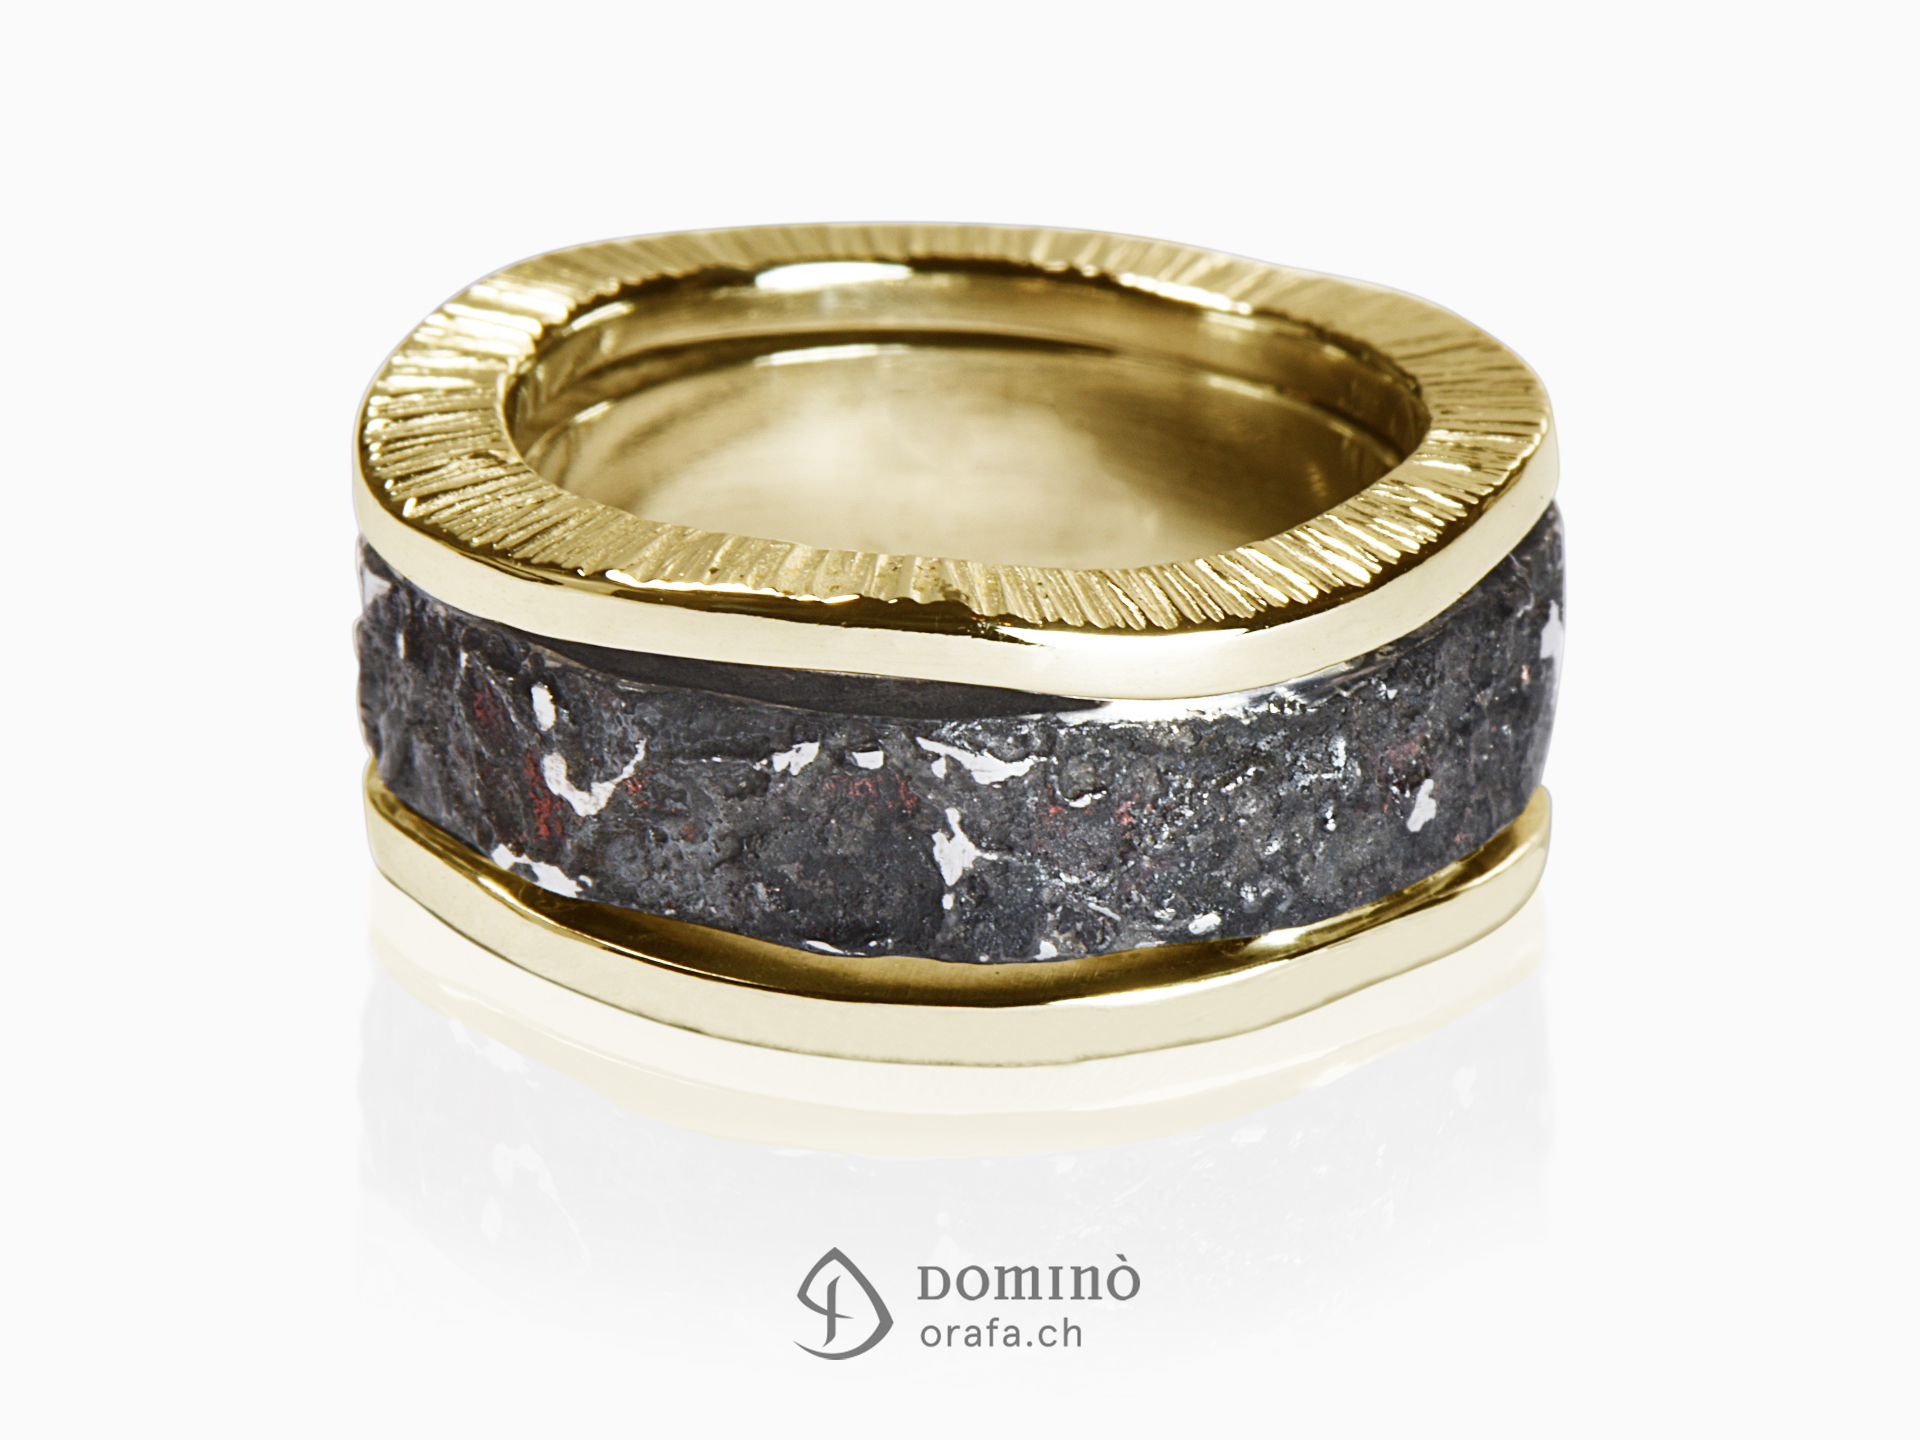 Ferro Prezioso ring with irregular edge